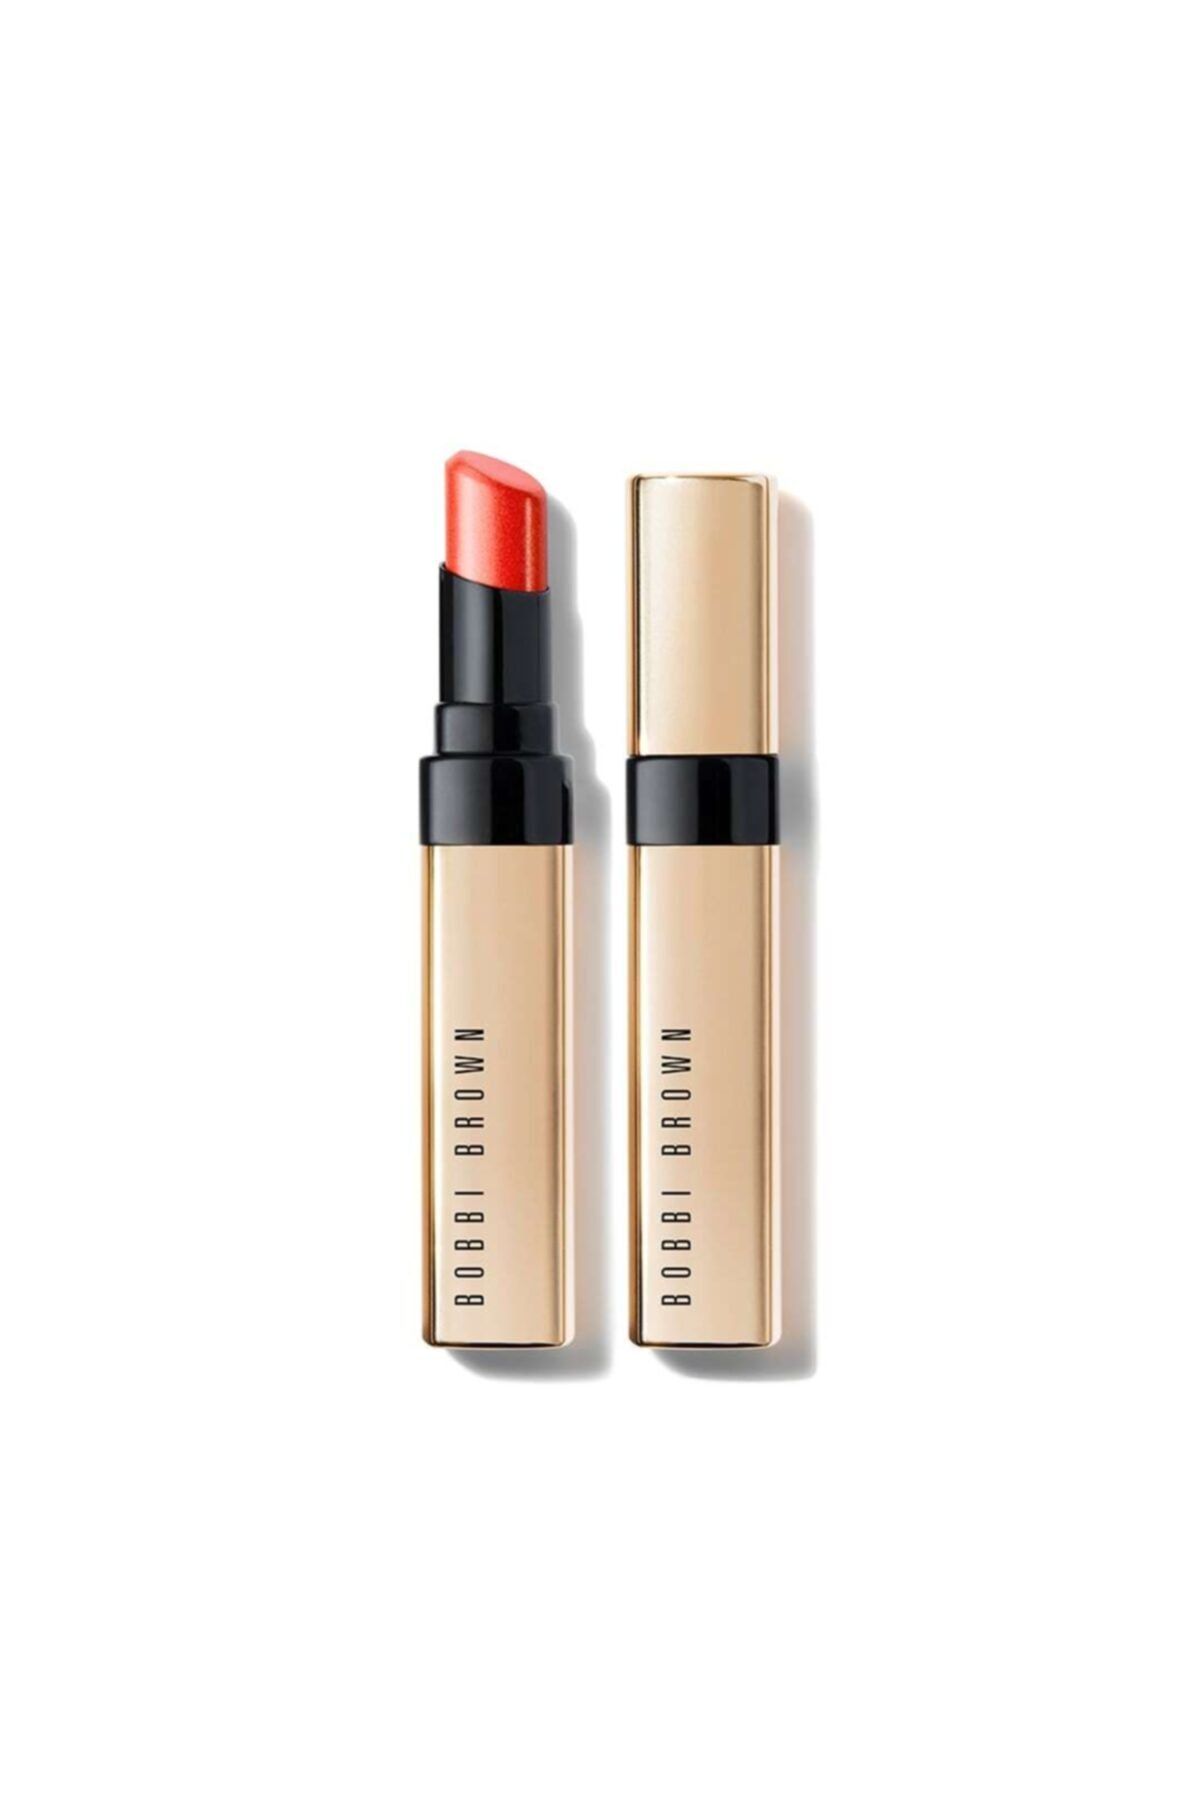 Bobbi Brown Luxe Shine Intense Lipstick / Ruj Fh19 2.3g Showstopper 716170225579